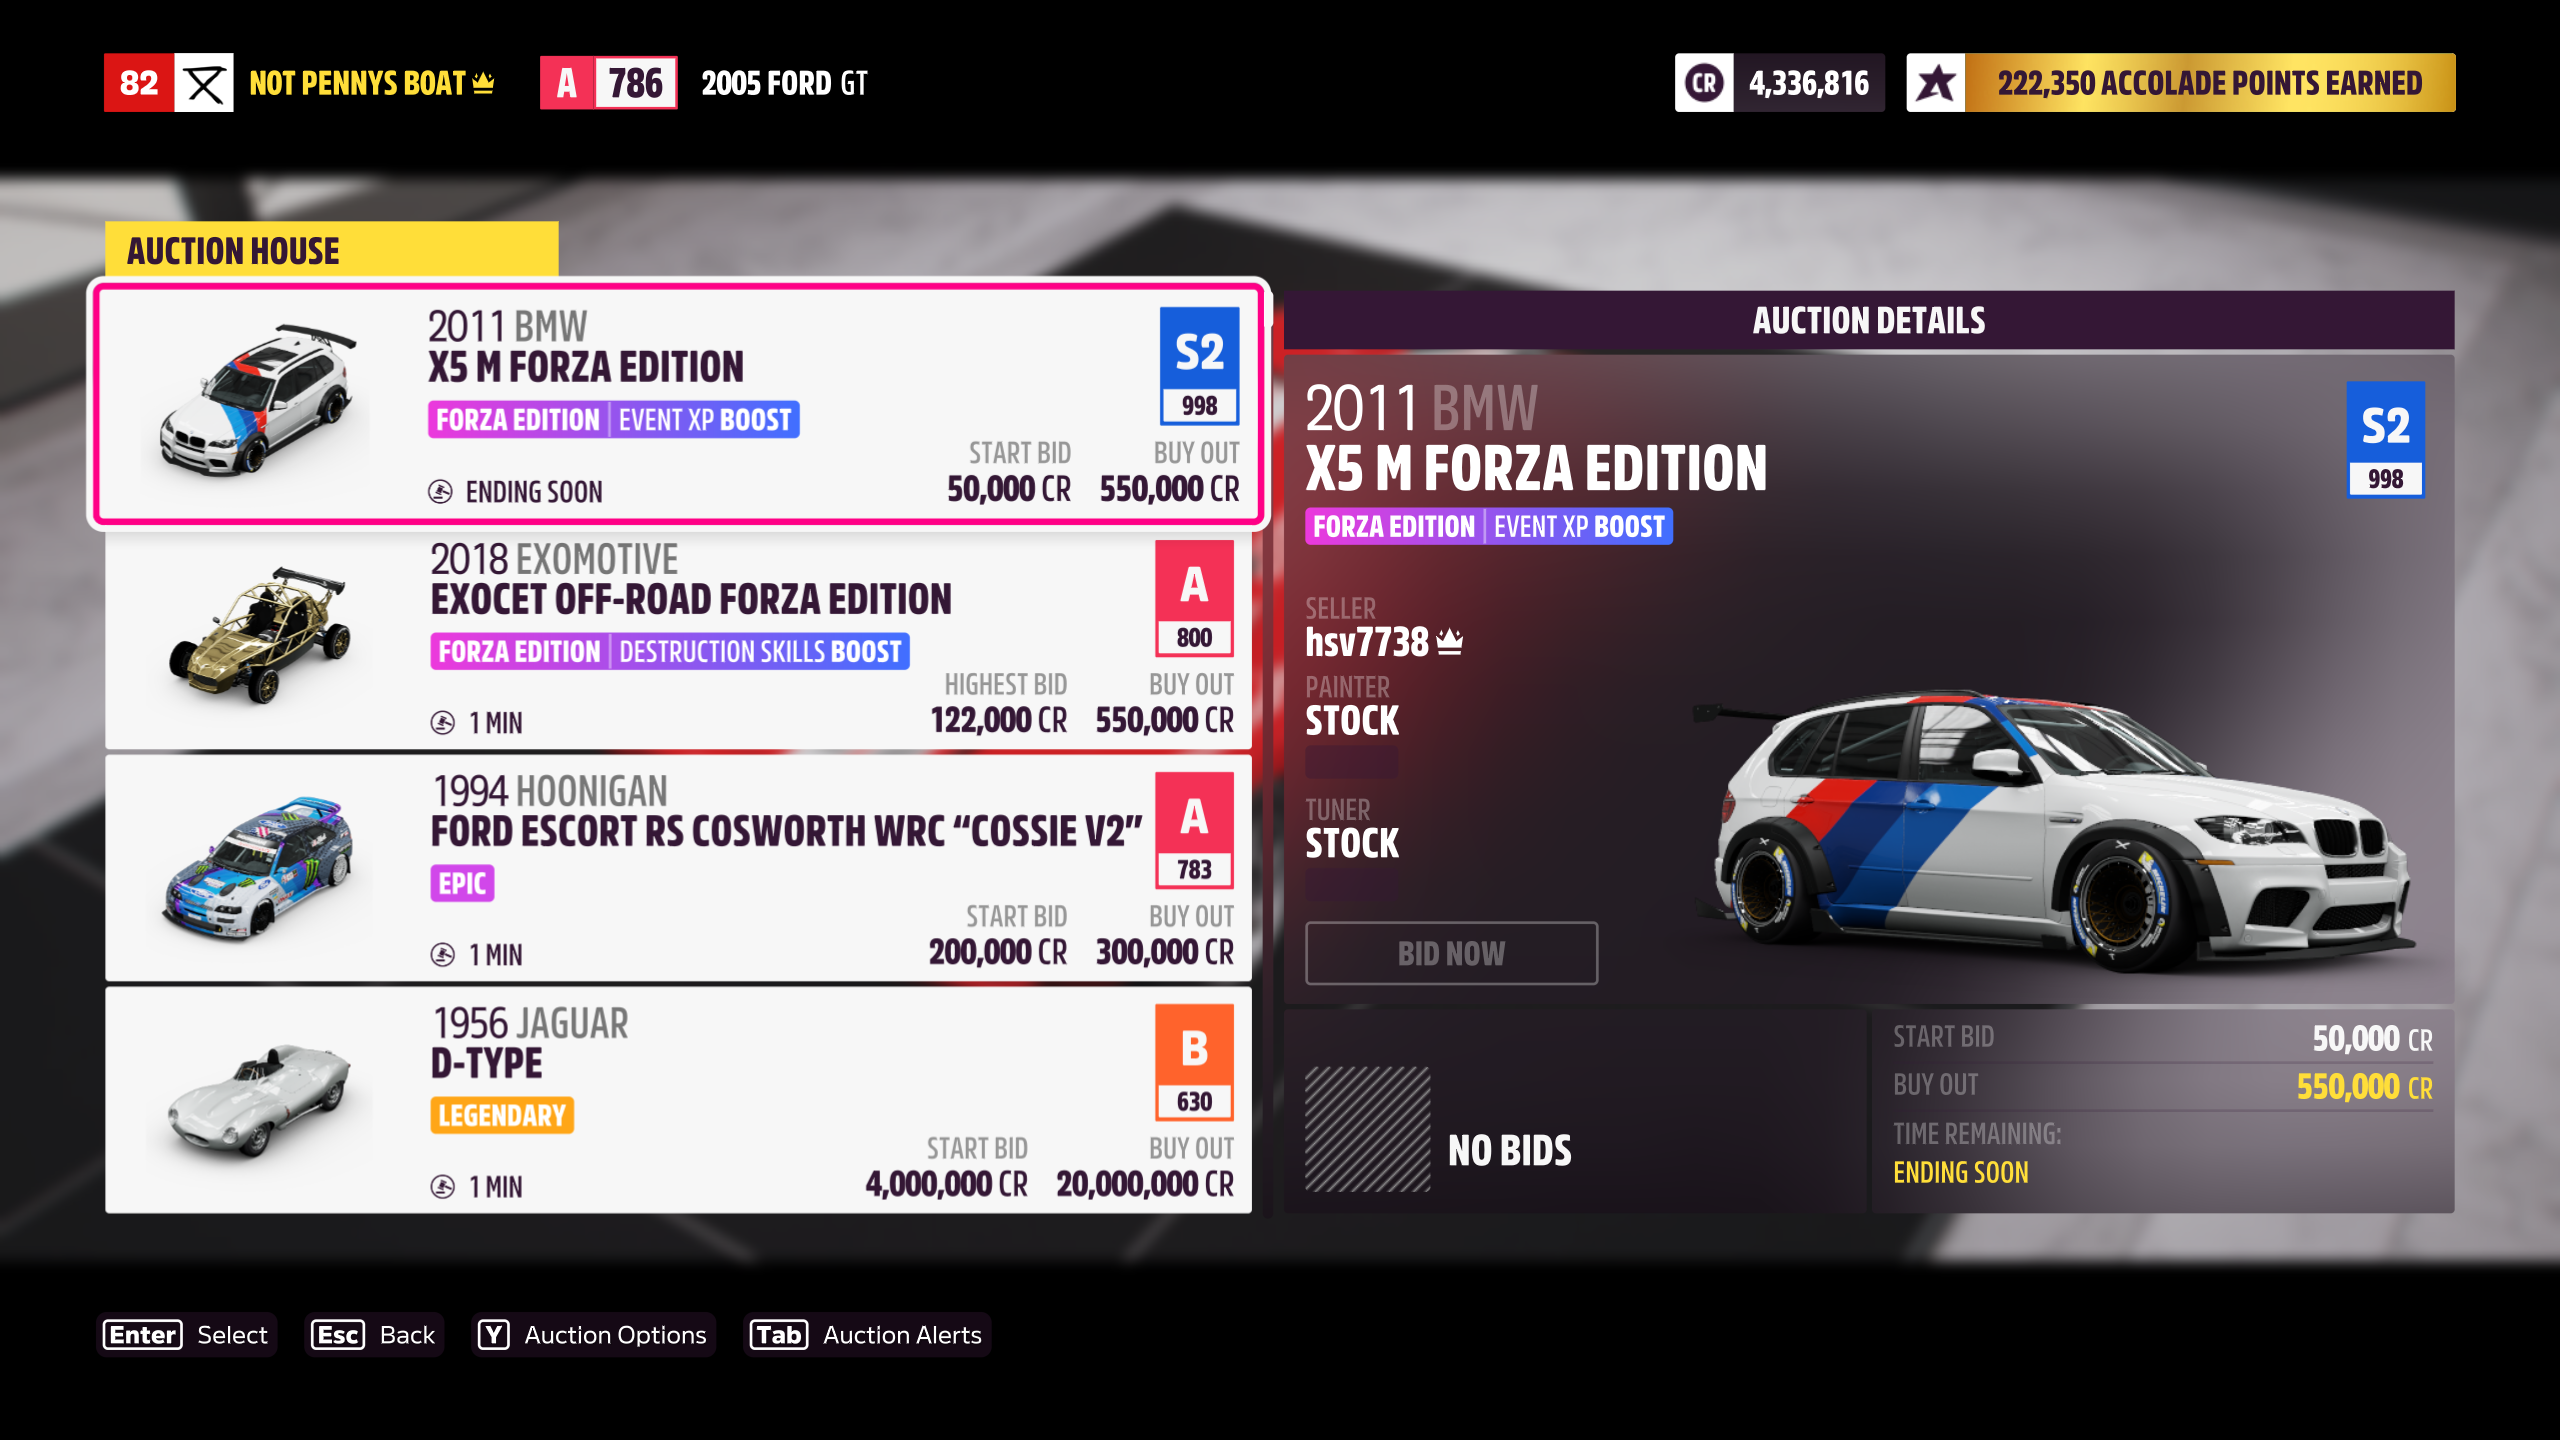 Forza Horizon 5, Software